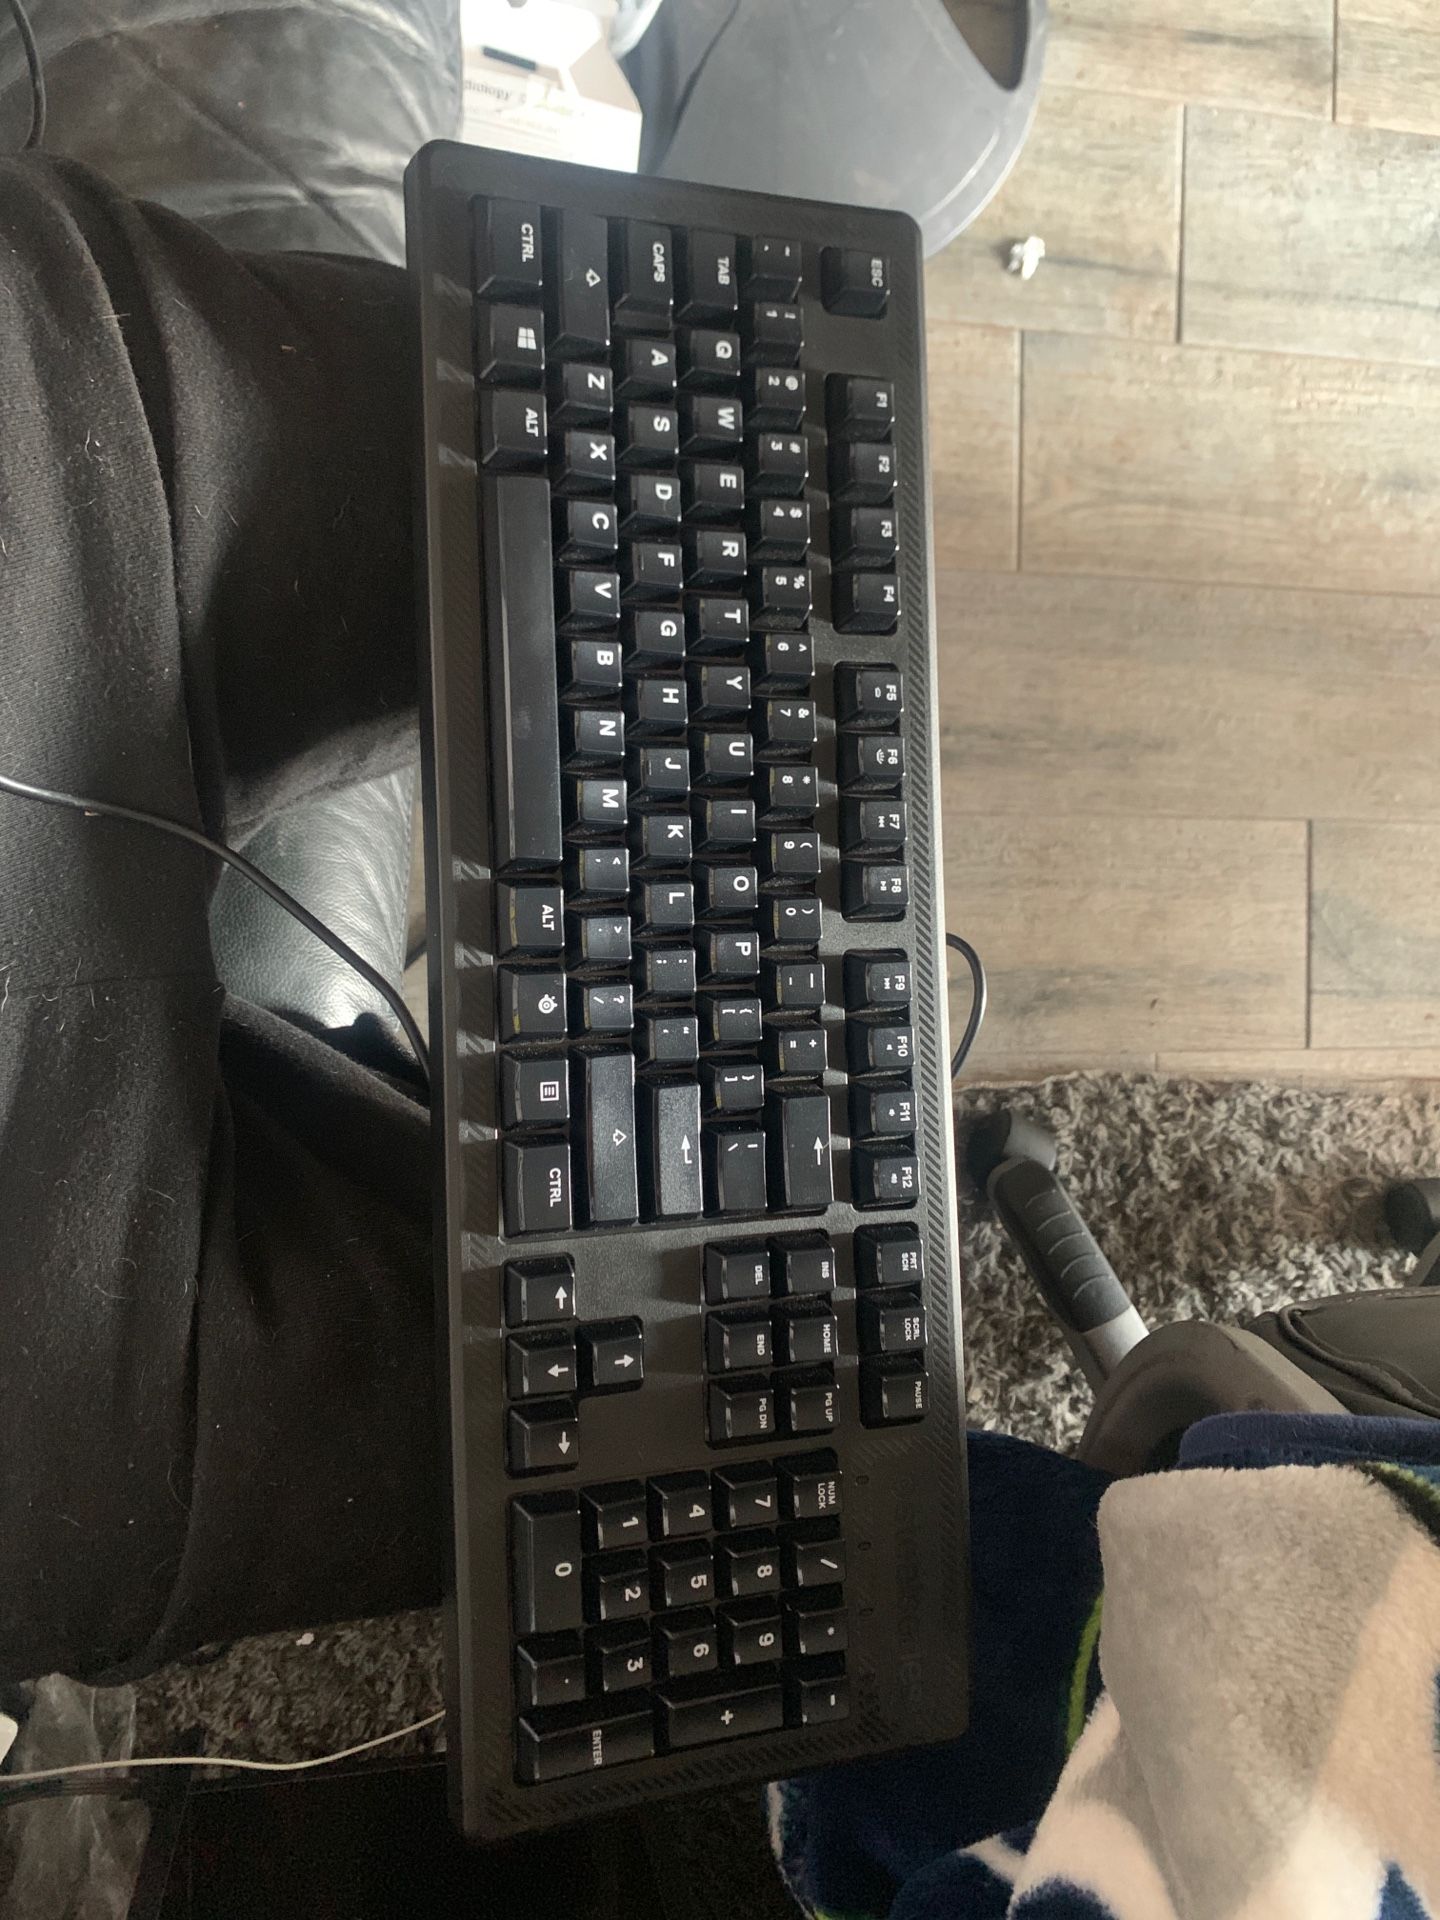 keyboard, new